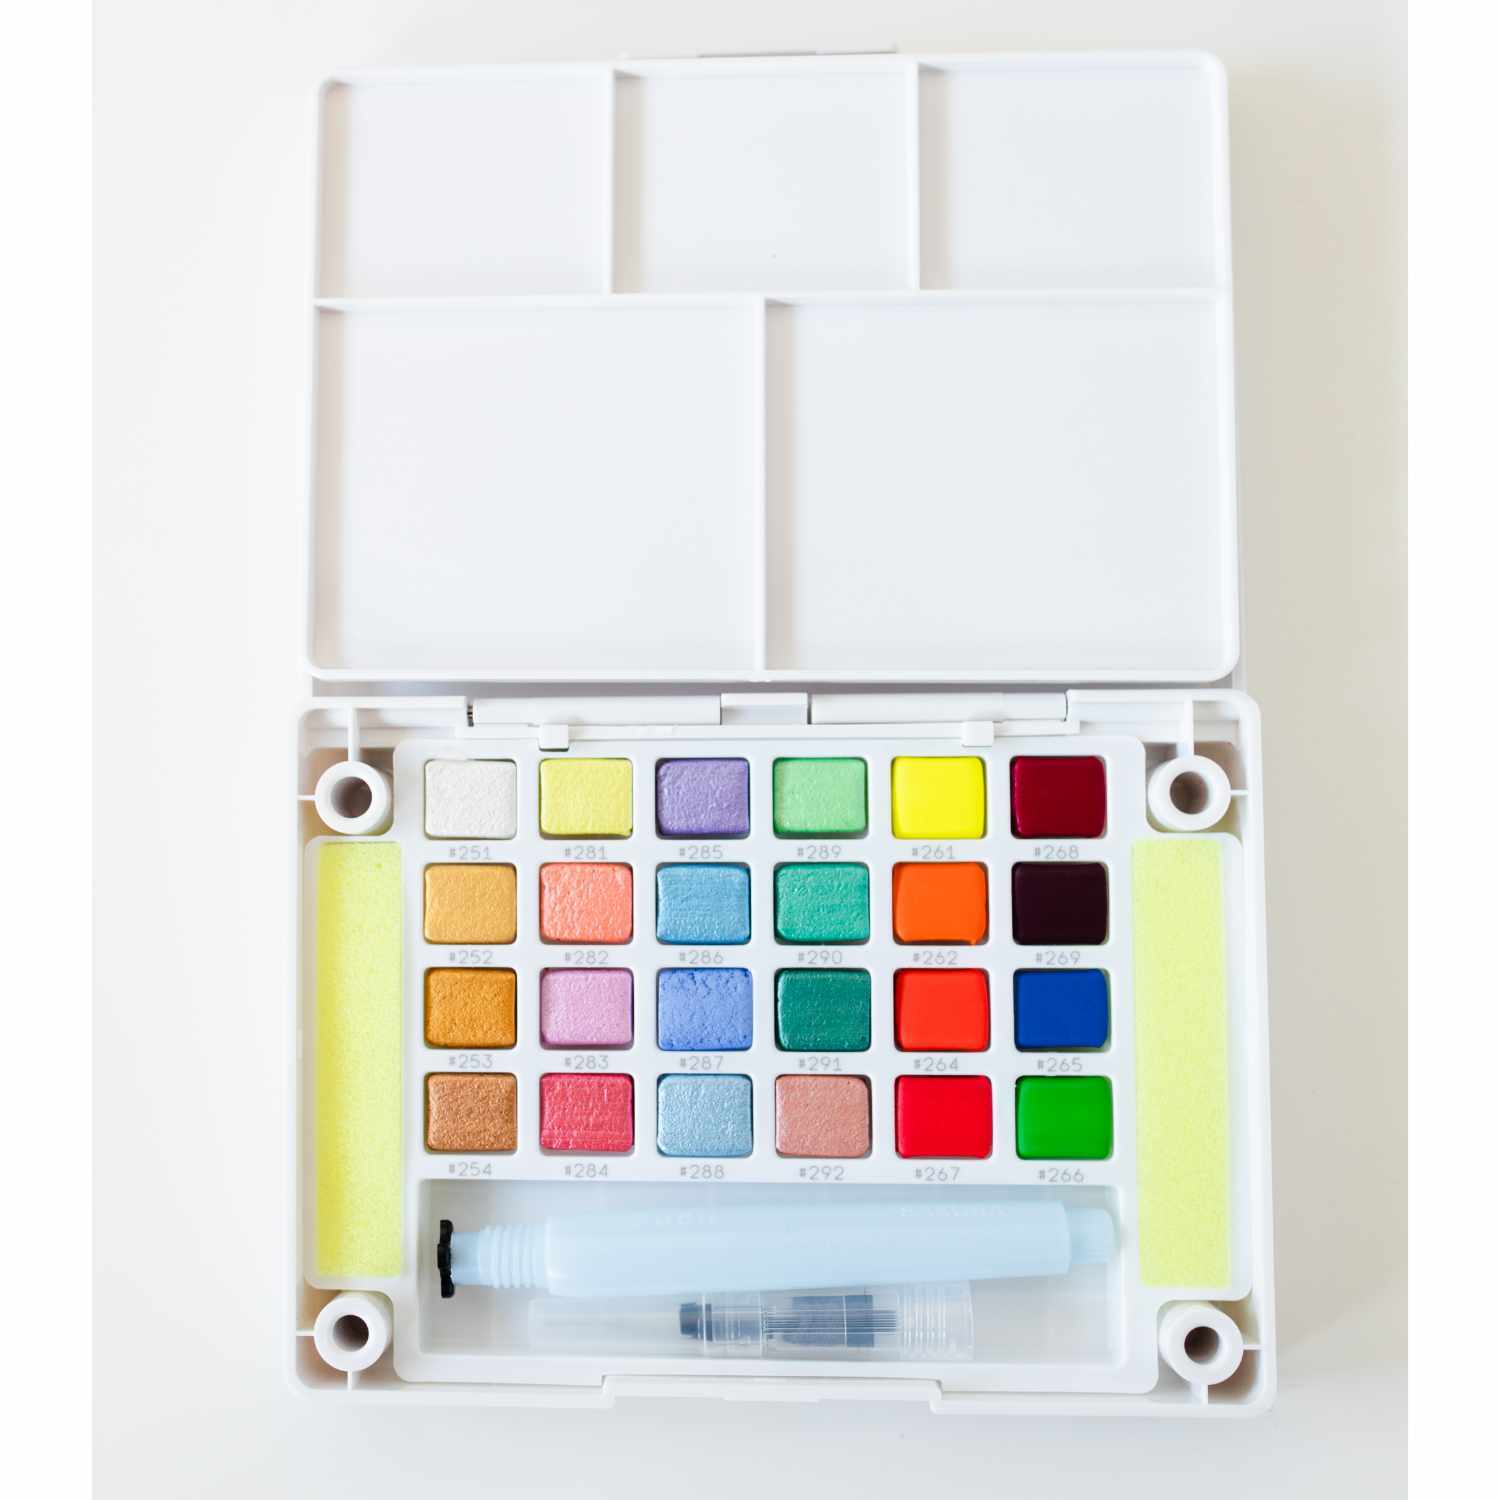 Water Color Sketchbox Creative Art Colours 24 Farben